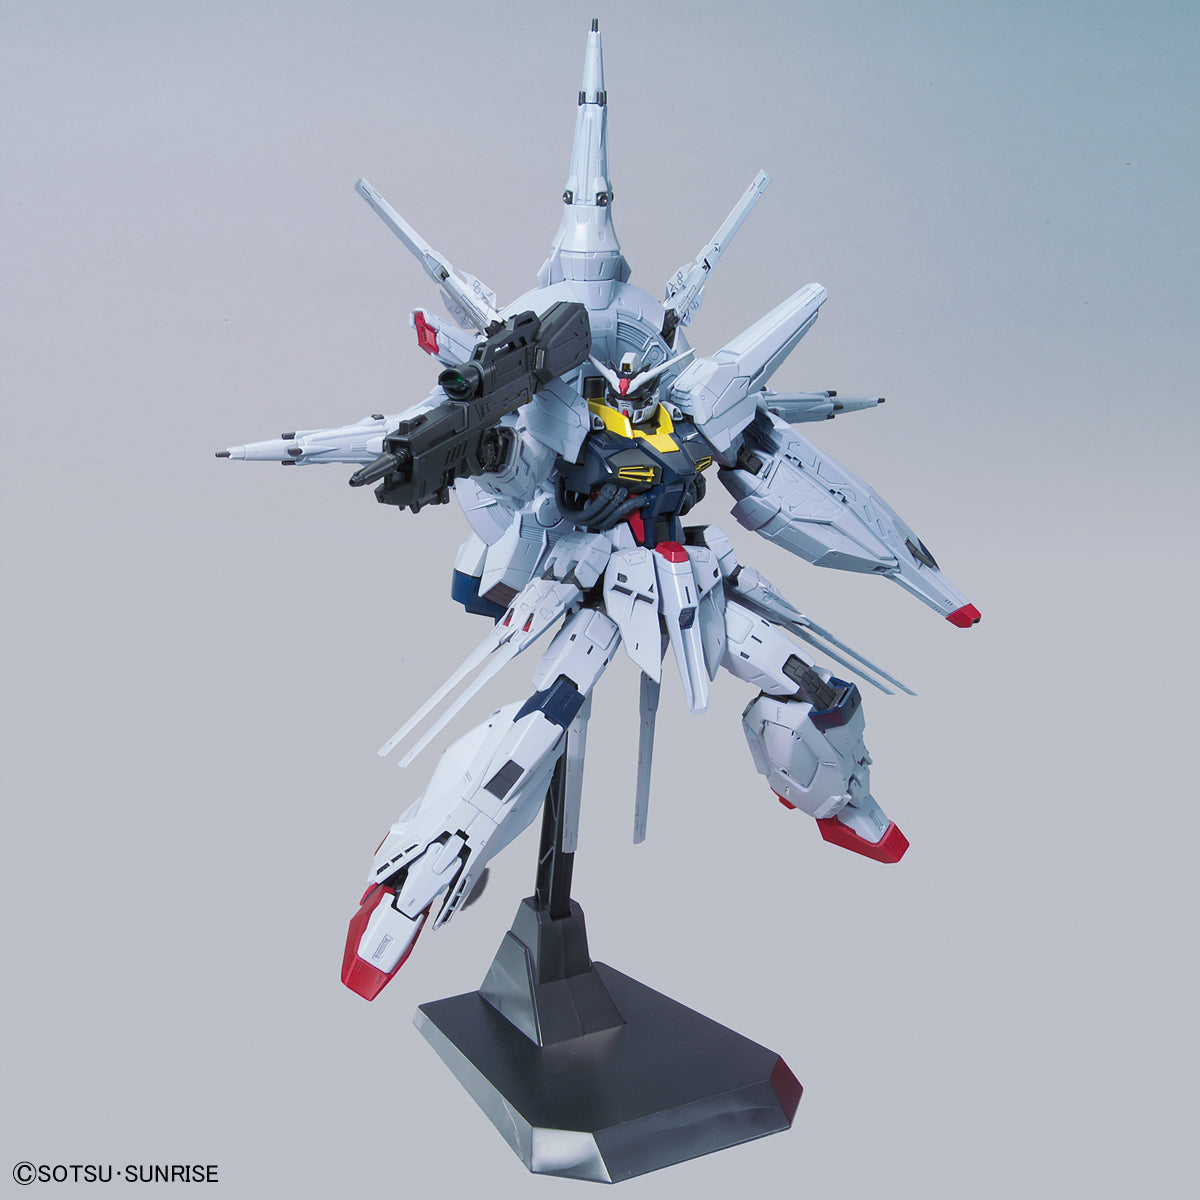 MG - ZGMF-X13A Providence Gundam